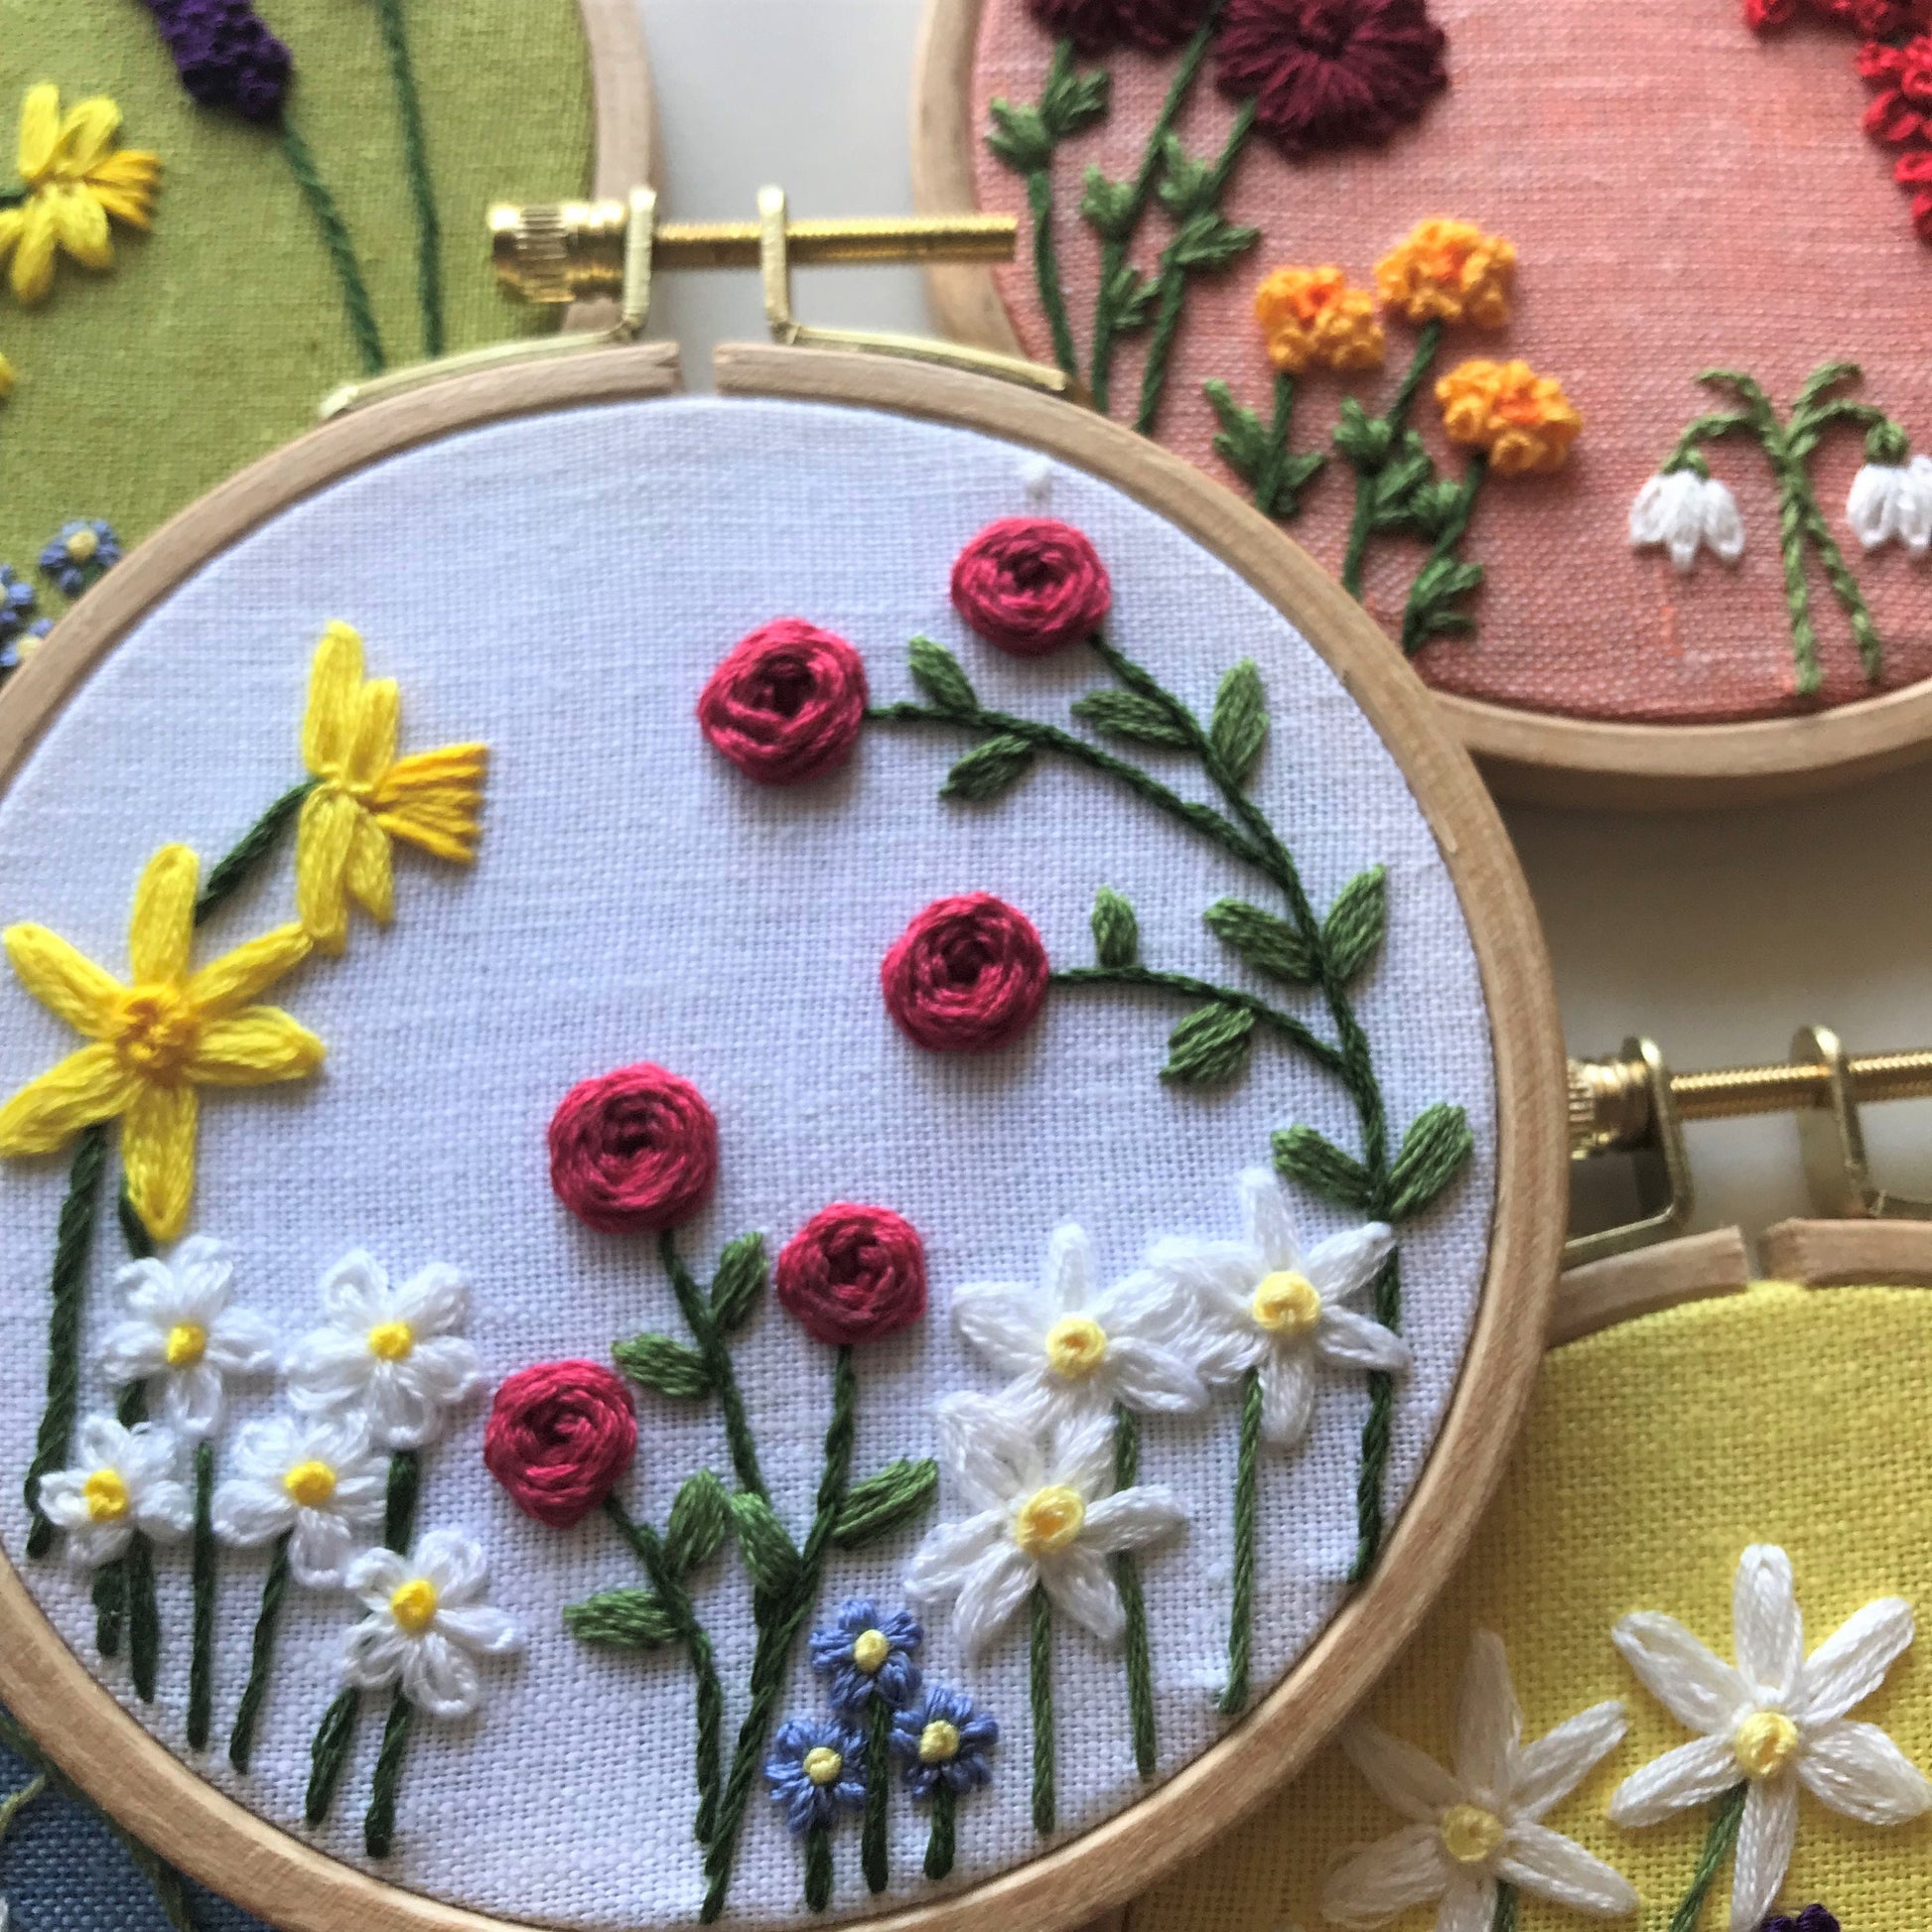 Best Friends Embroidery Kit Beautiful Girl Embroidery Pattern English Manual